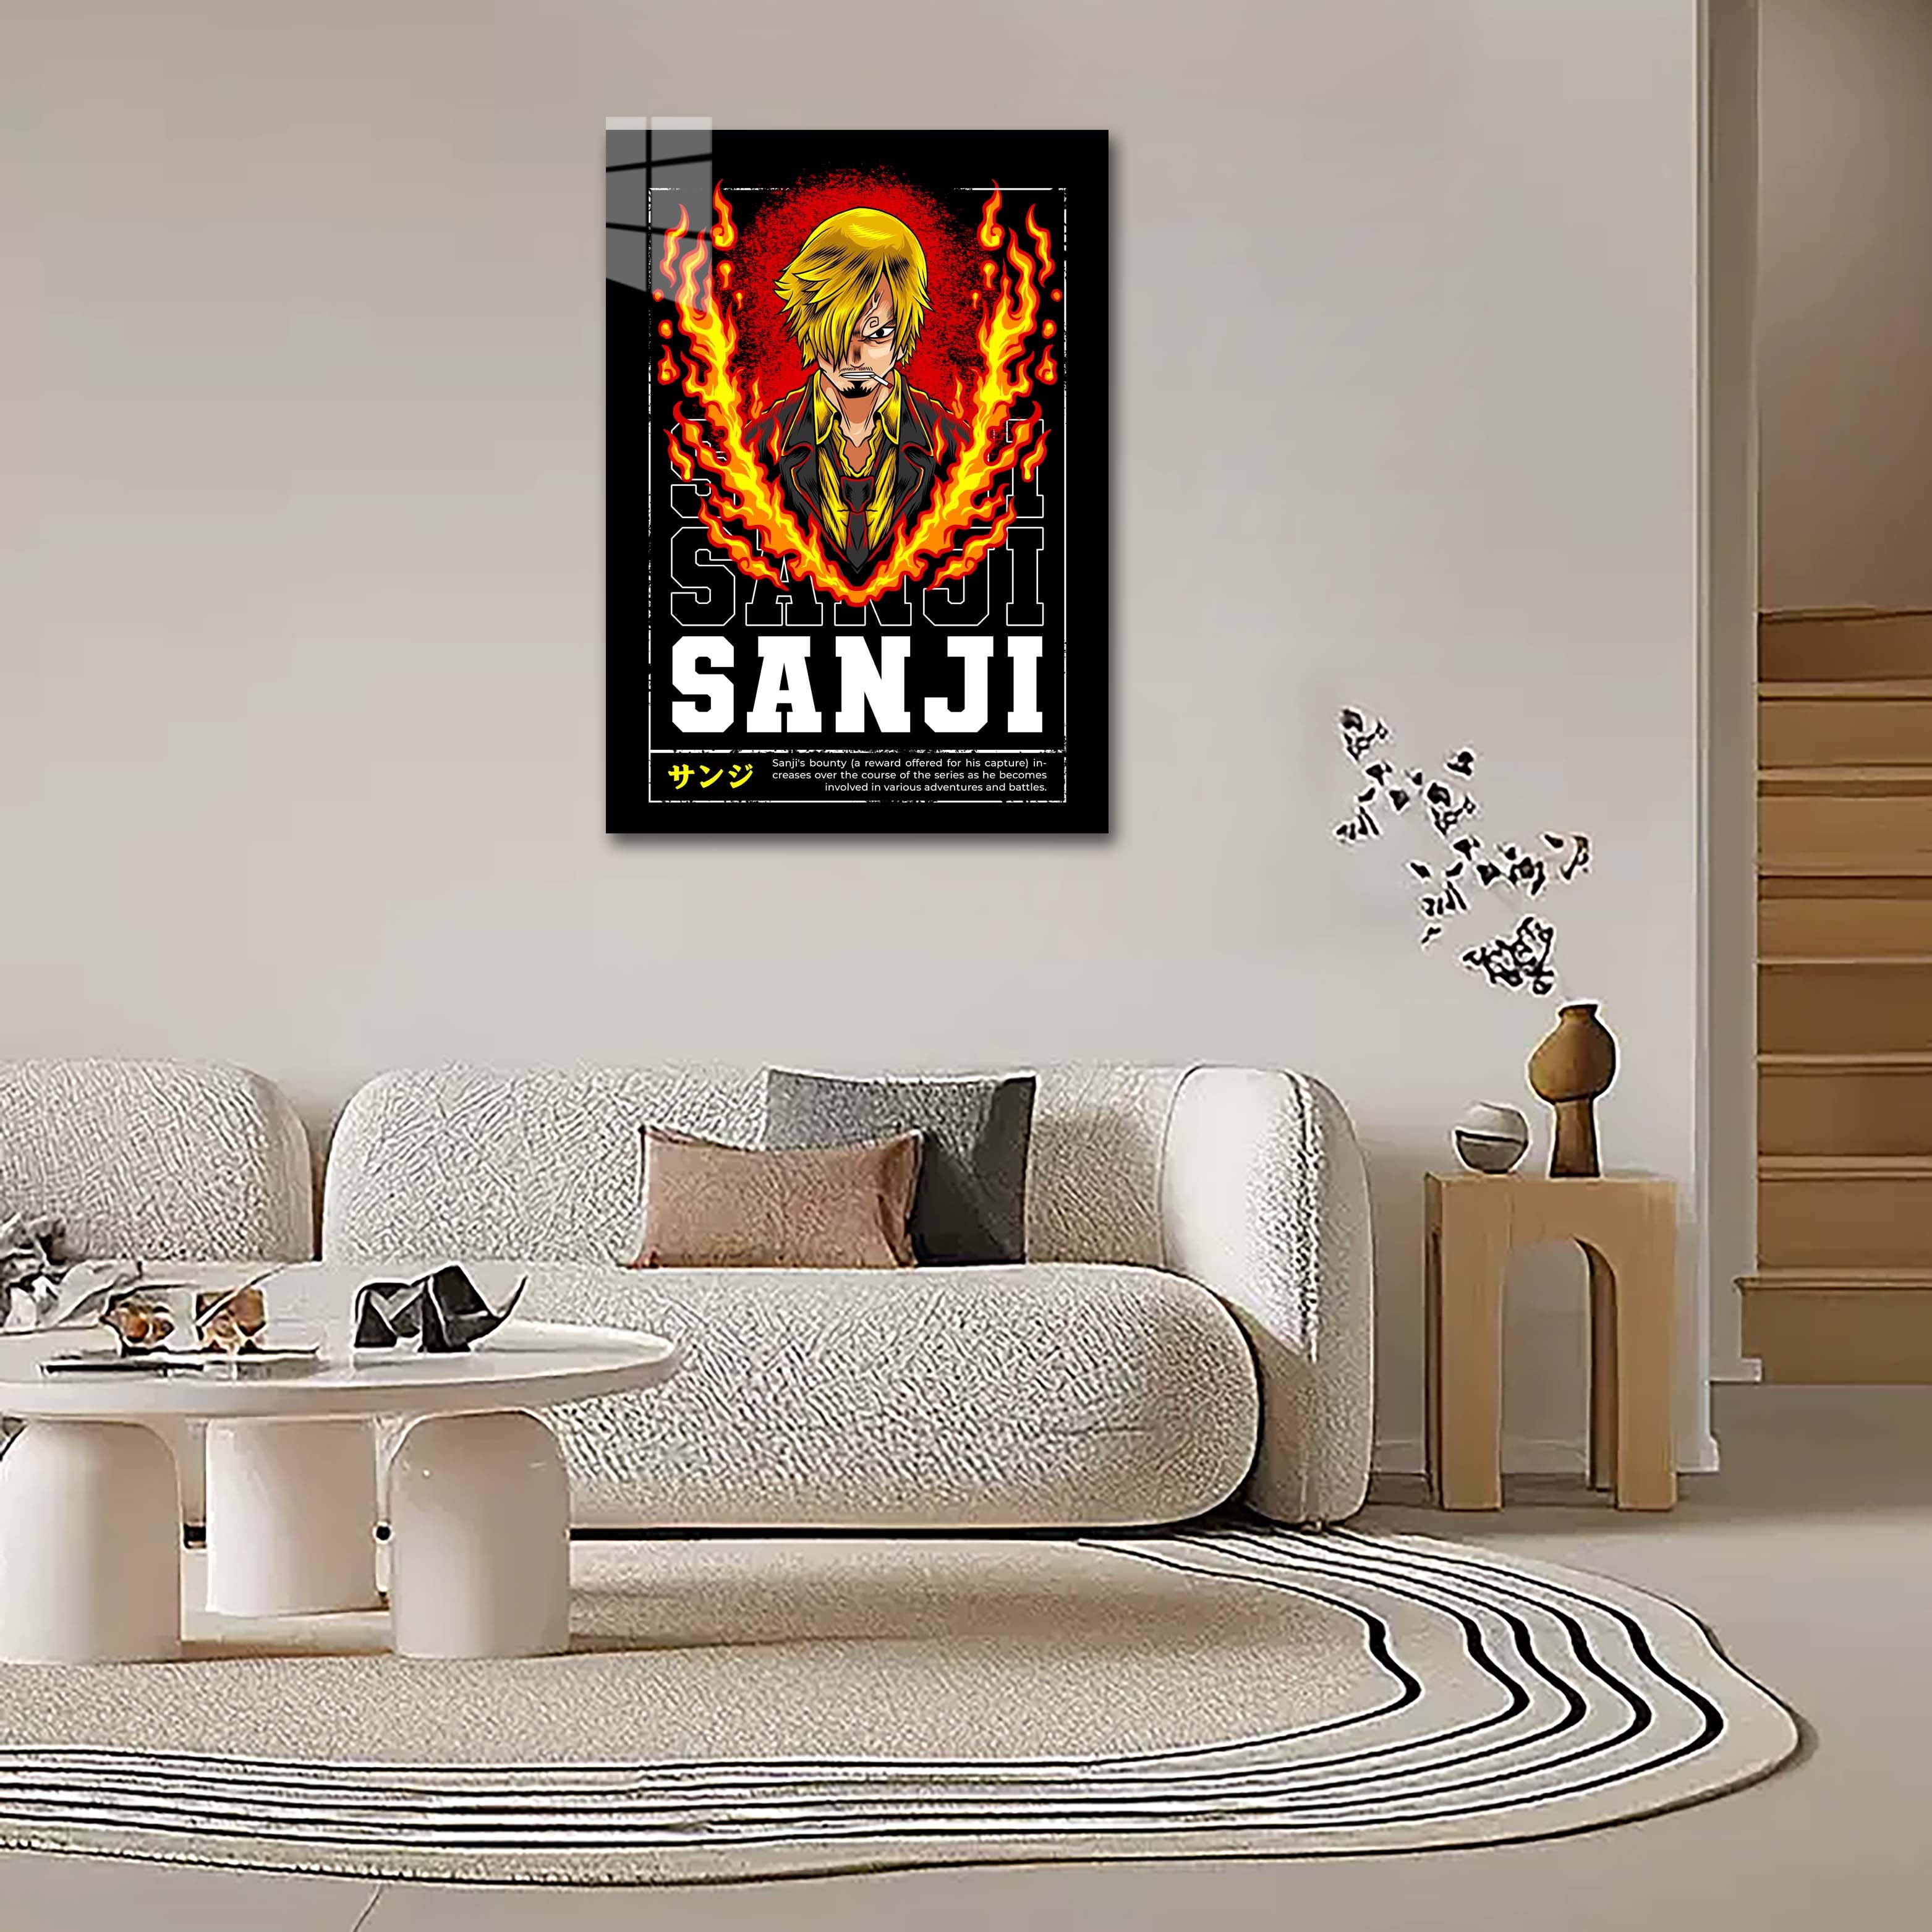 Vinsmoke Sanji One Piece-designed by @adamkhabibi